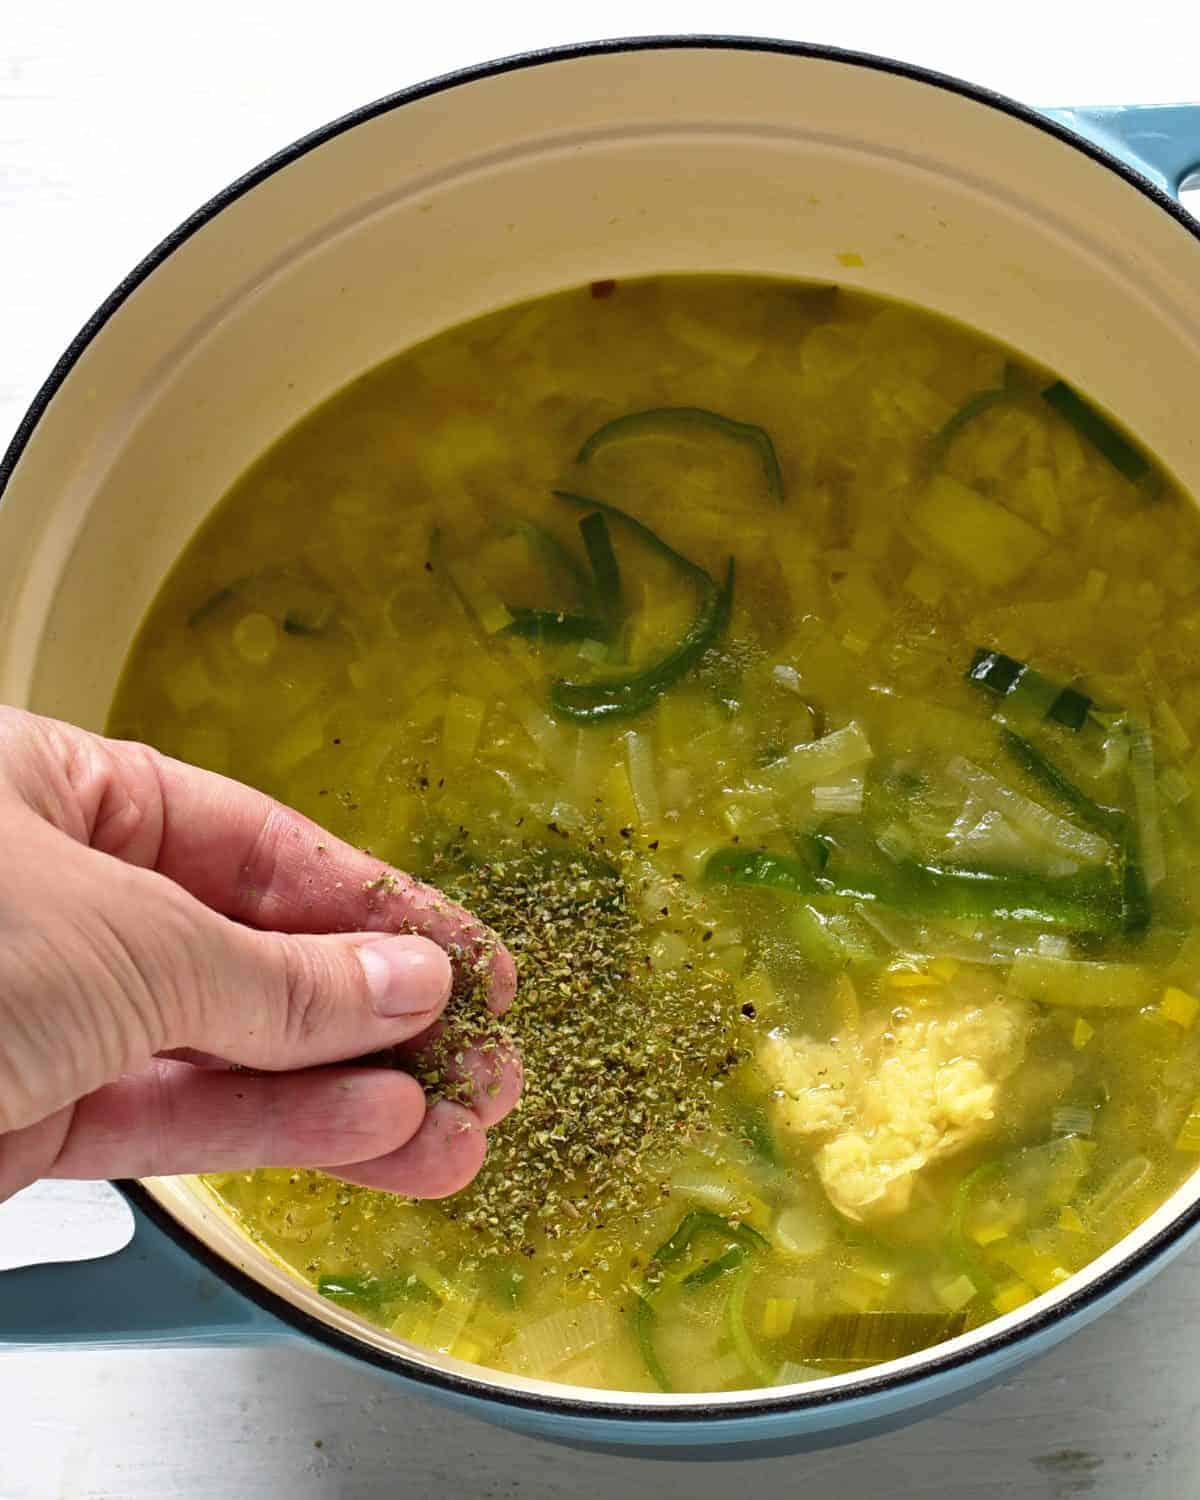 adding driend marjoram to a leek soup